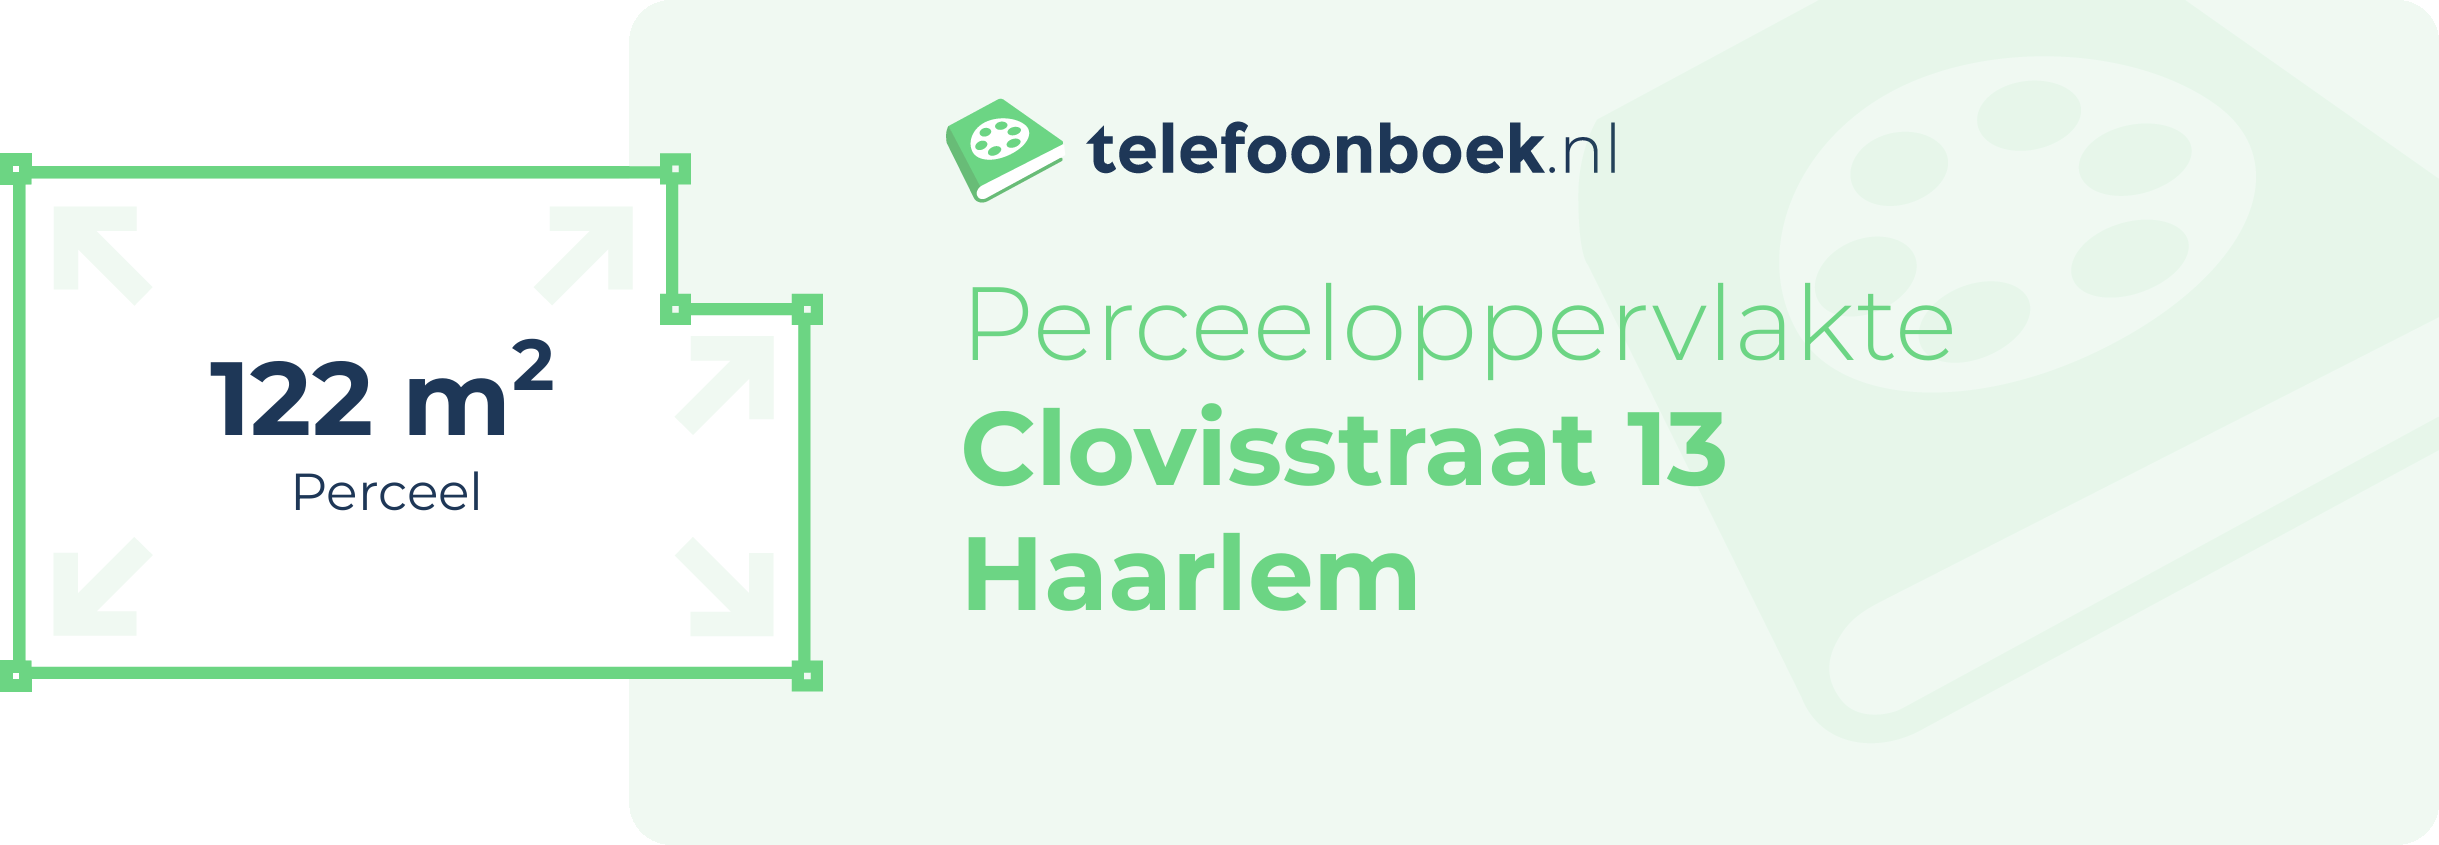 Perceeloppervlakte Clovisstraat 13 Haarlem